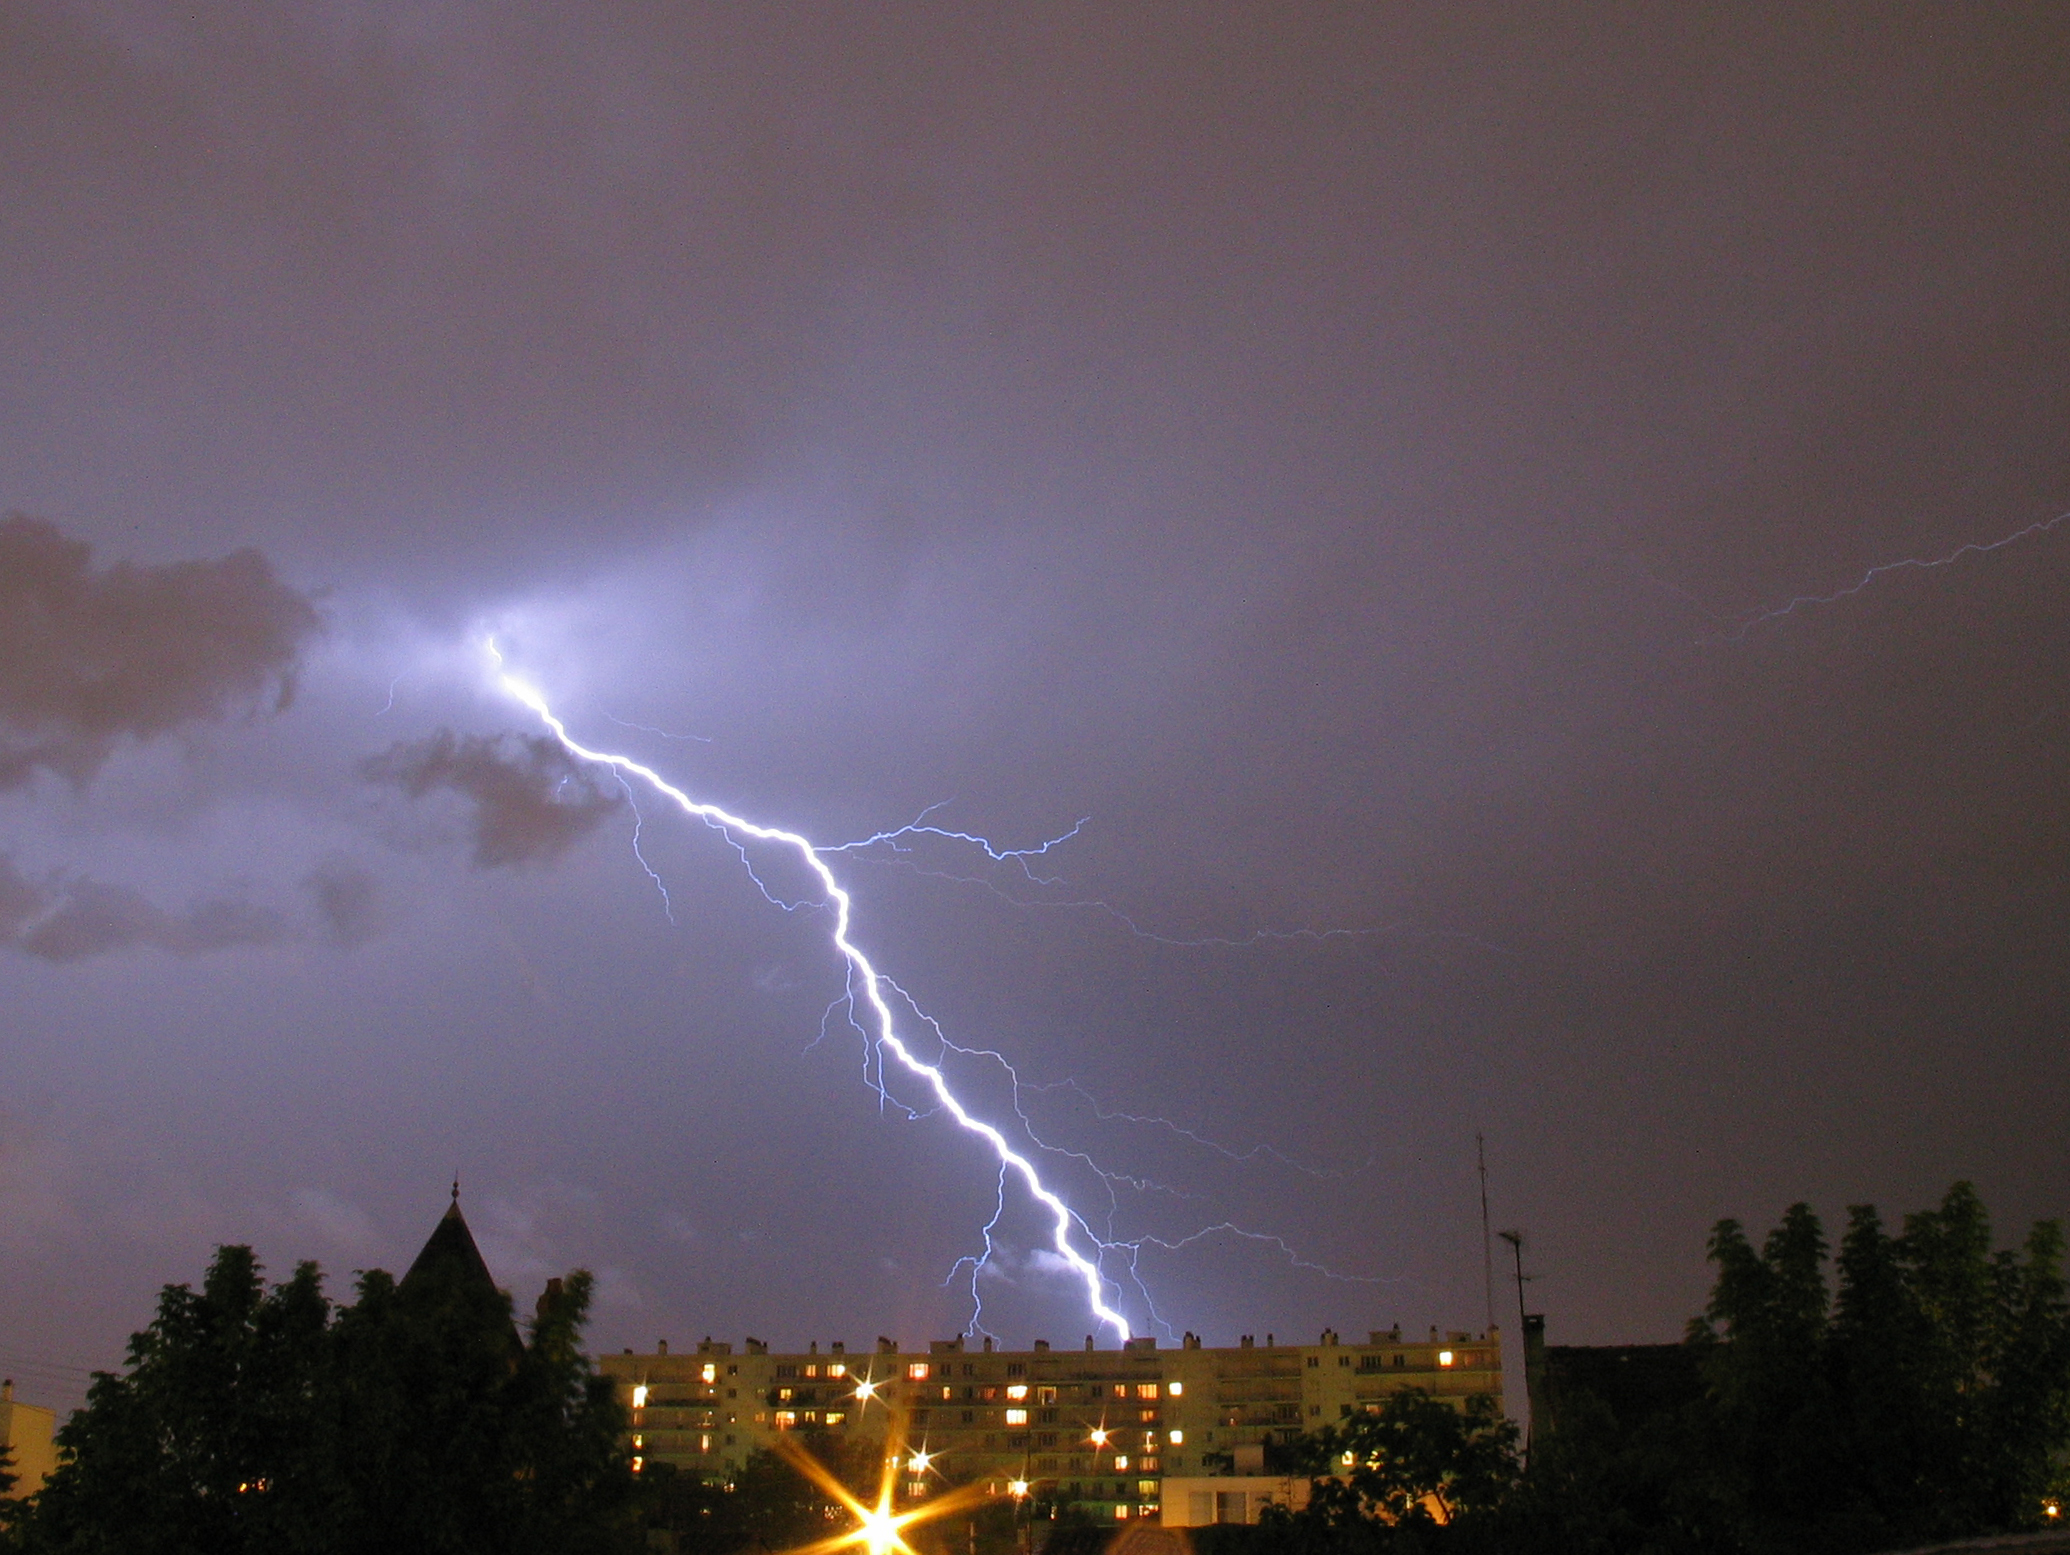 File:CG lightning strike.JPG - Wikimedia Commons